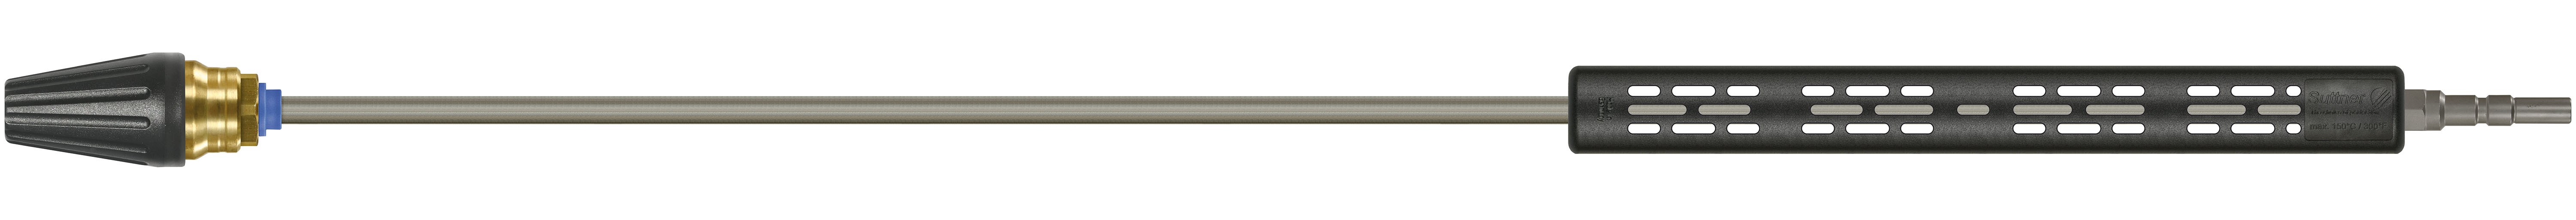 Rotabuse céramique avec lance 1000mm, 200-400 bar, Calibre 065